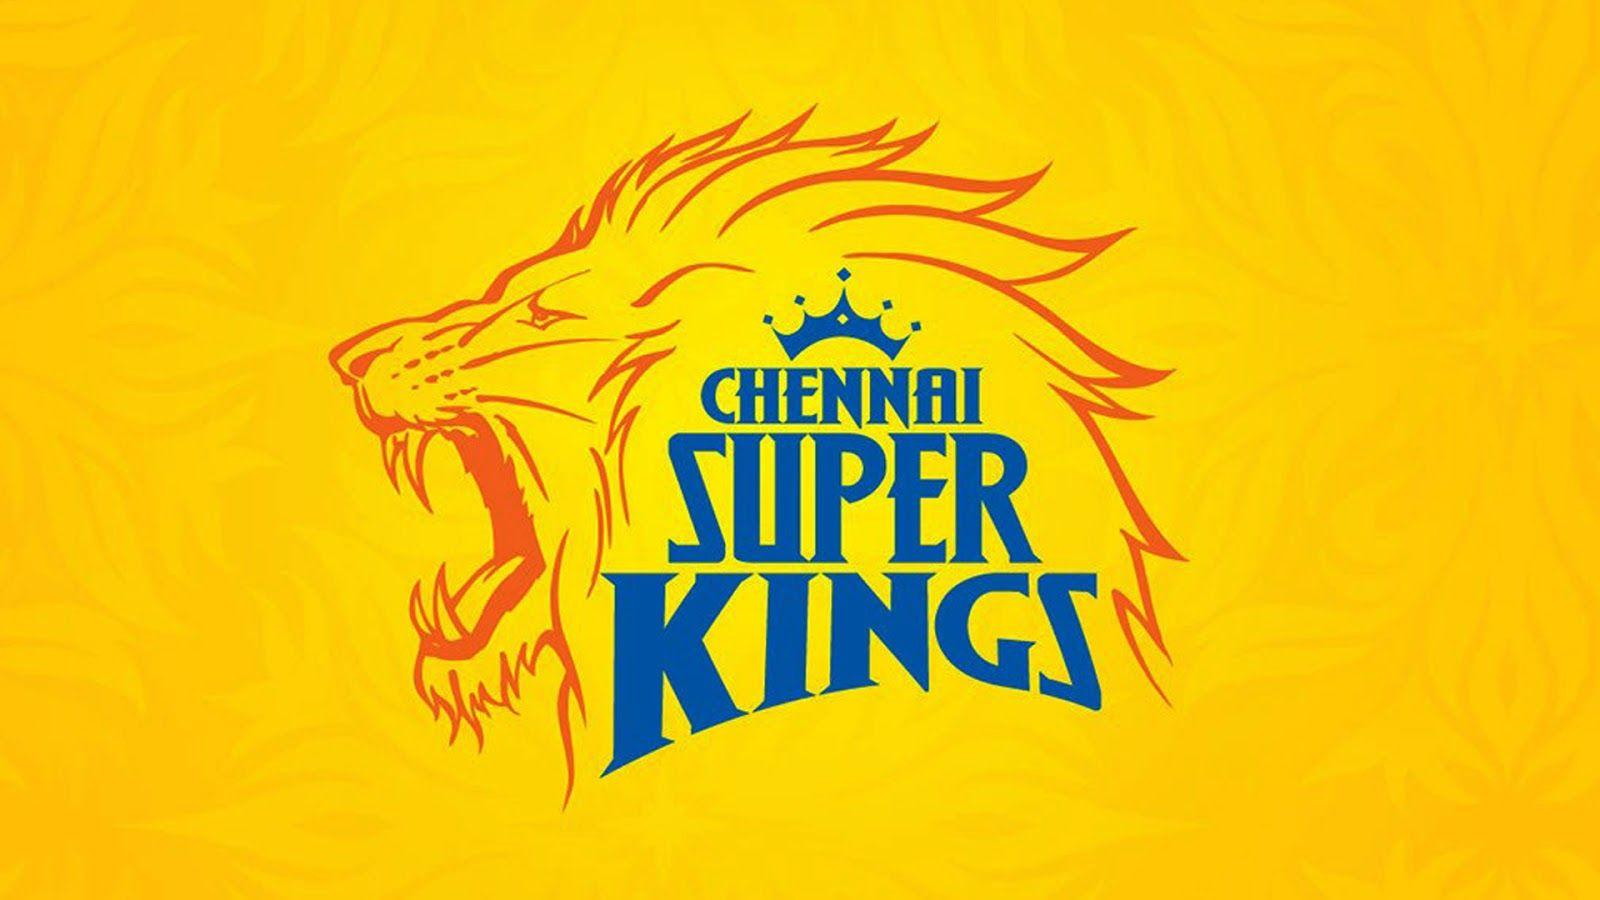 Chennai Super Kings HD Wallpaper Download Free 1080p. IPL 2018 HD